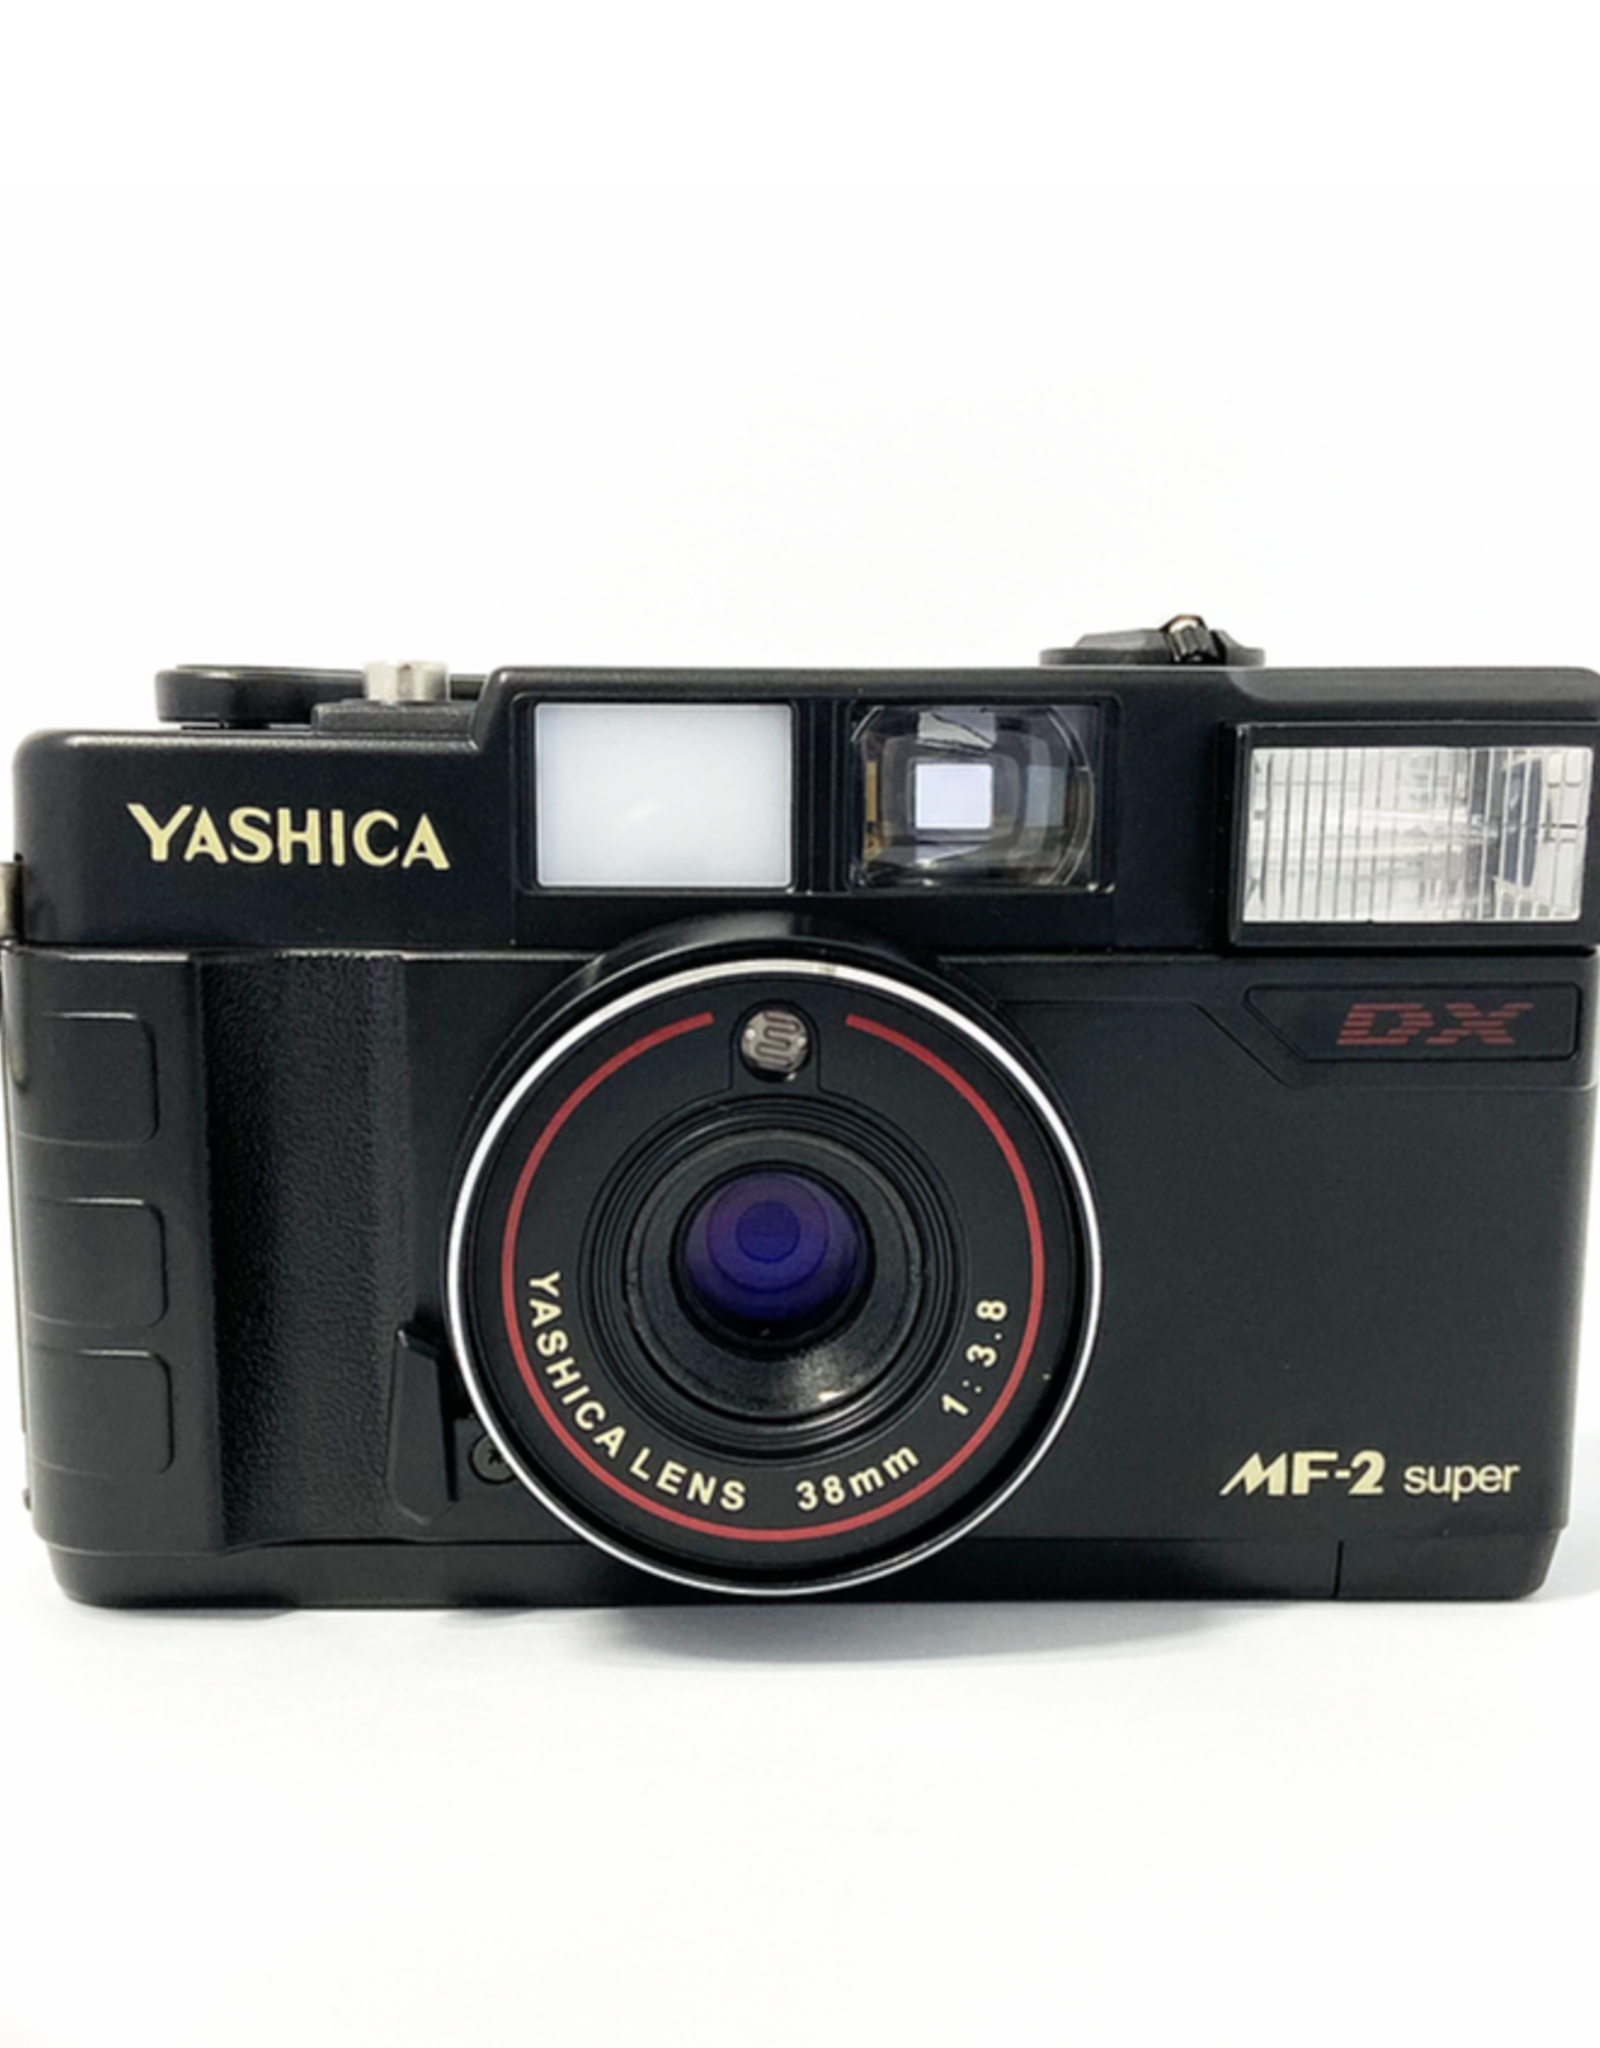 Yashica Yashica MF-2 Super DX 35mm Camera (Black)